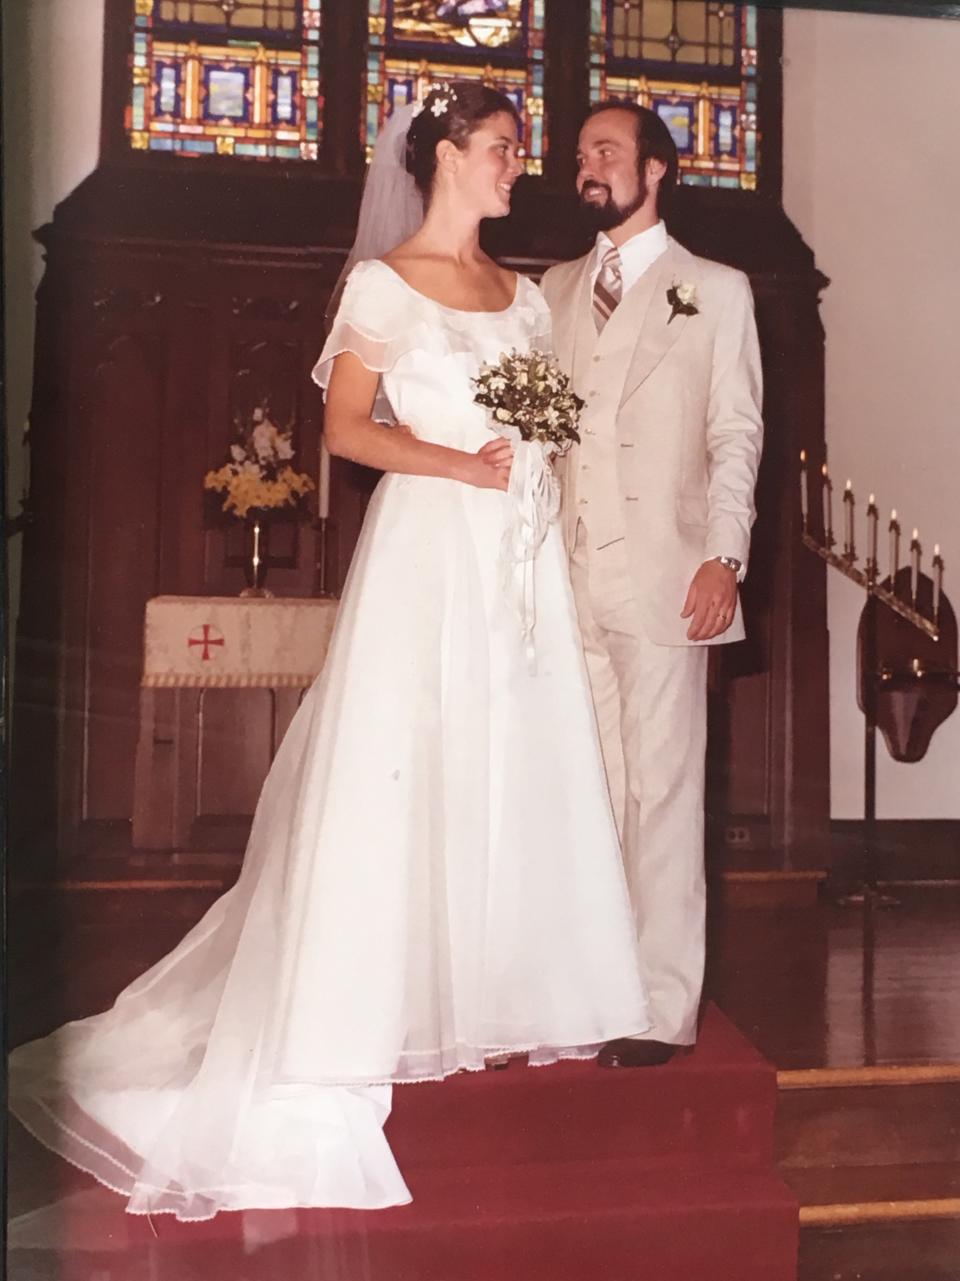 Richard and Cindy Mylin on their wedding day in 1979.&nbsp; (Photo: Courtesy of Liz Mylin)